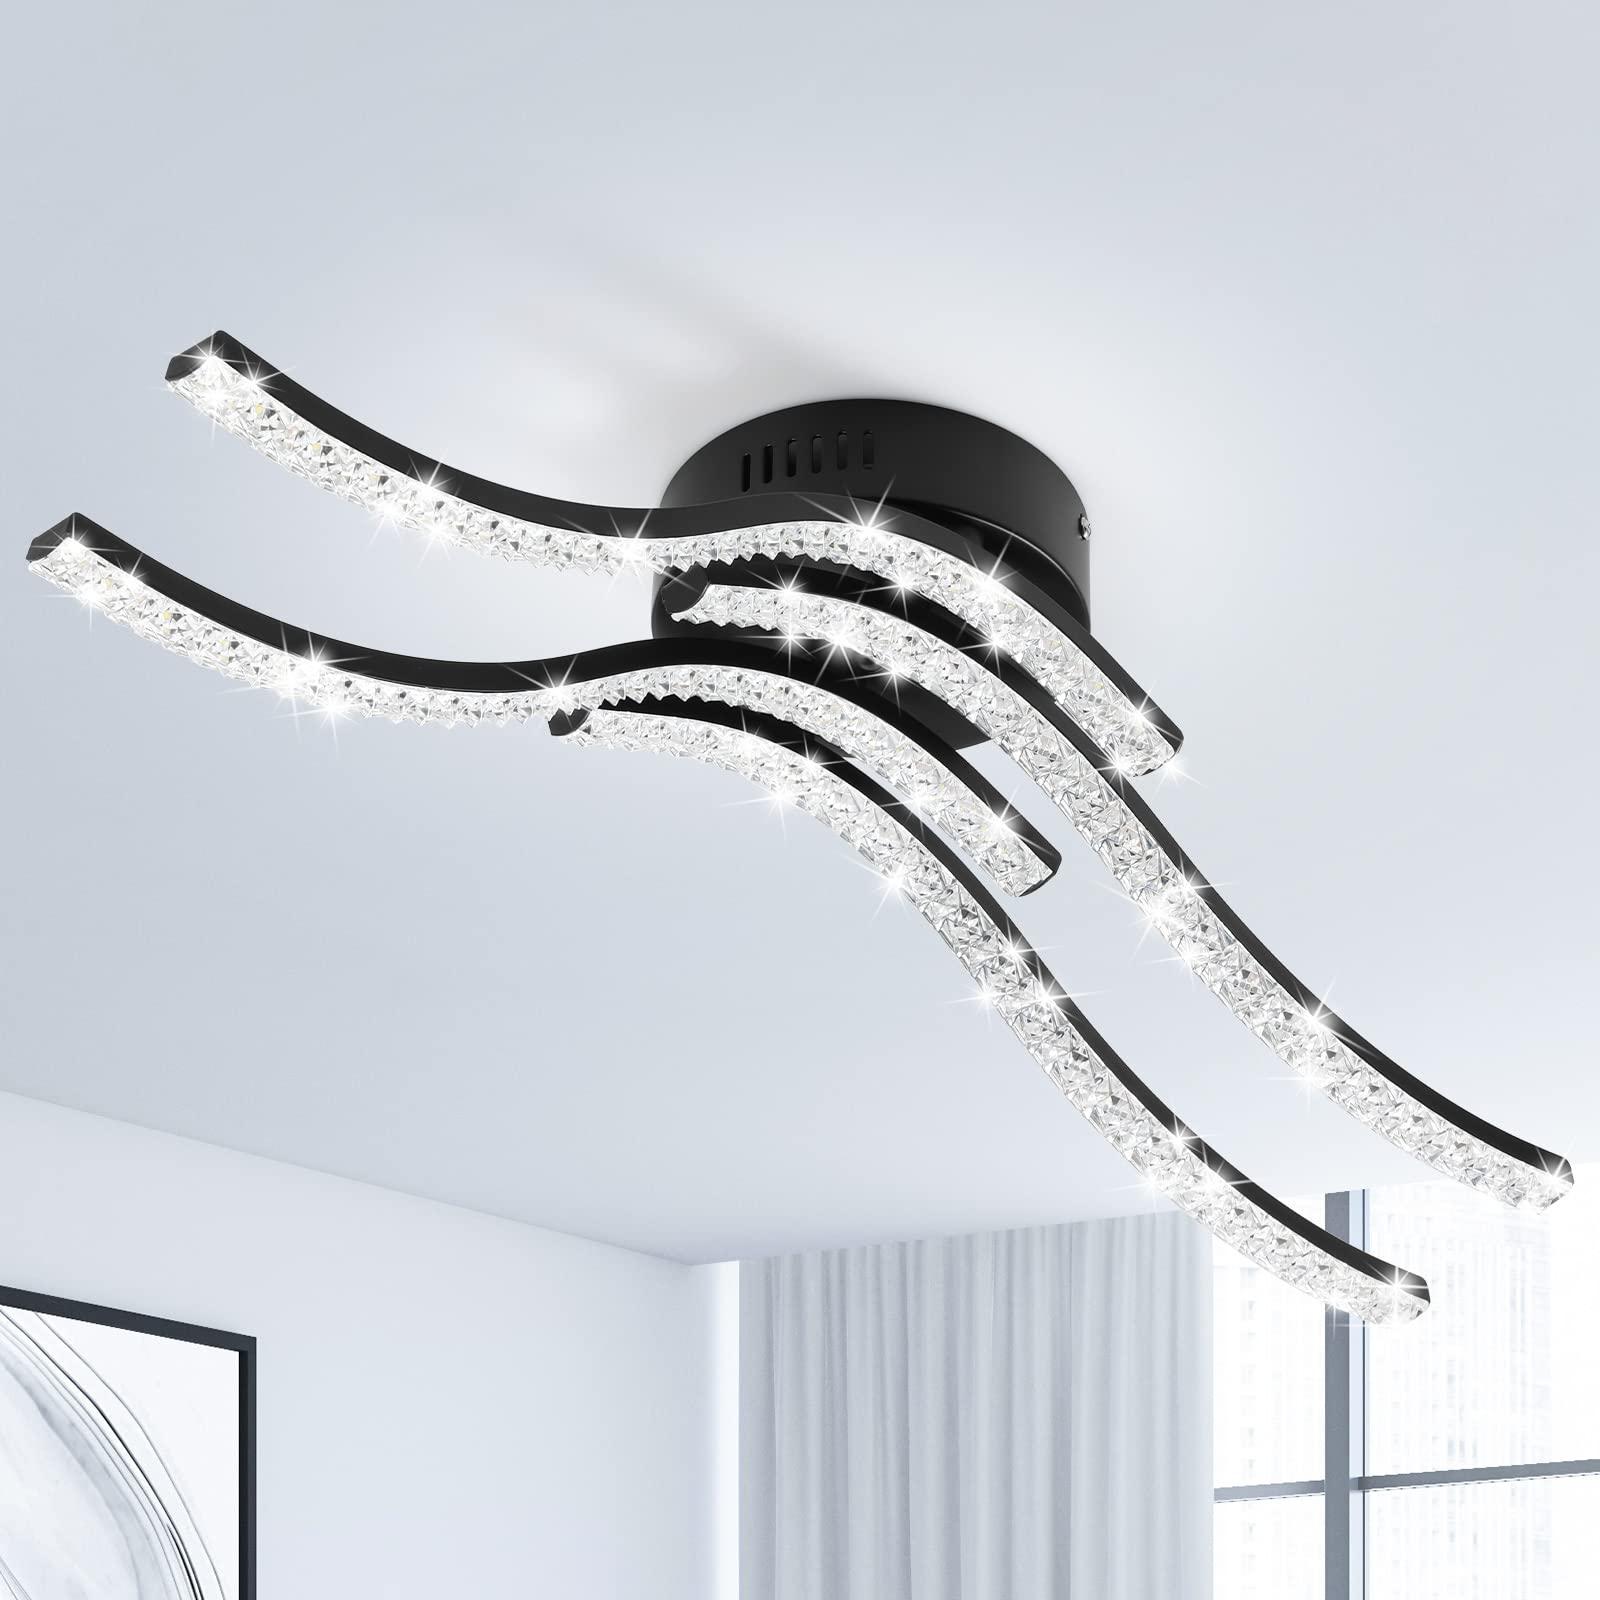 Zewanny LED Acrylic Ceiling Light 4 Built-in LED Boards,Flush Mount Ceiling Lights,32W 5500K,Wave Elegant Curved Design Ceilings Light Modern,for Dining Room Bedroom Kitchen Corridor 0